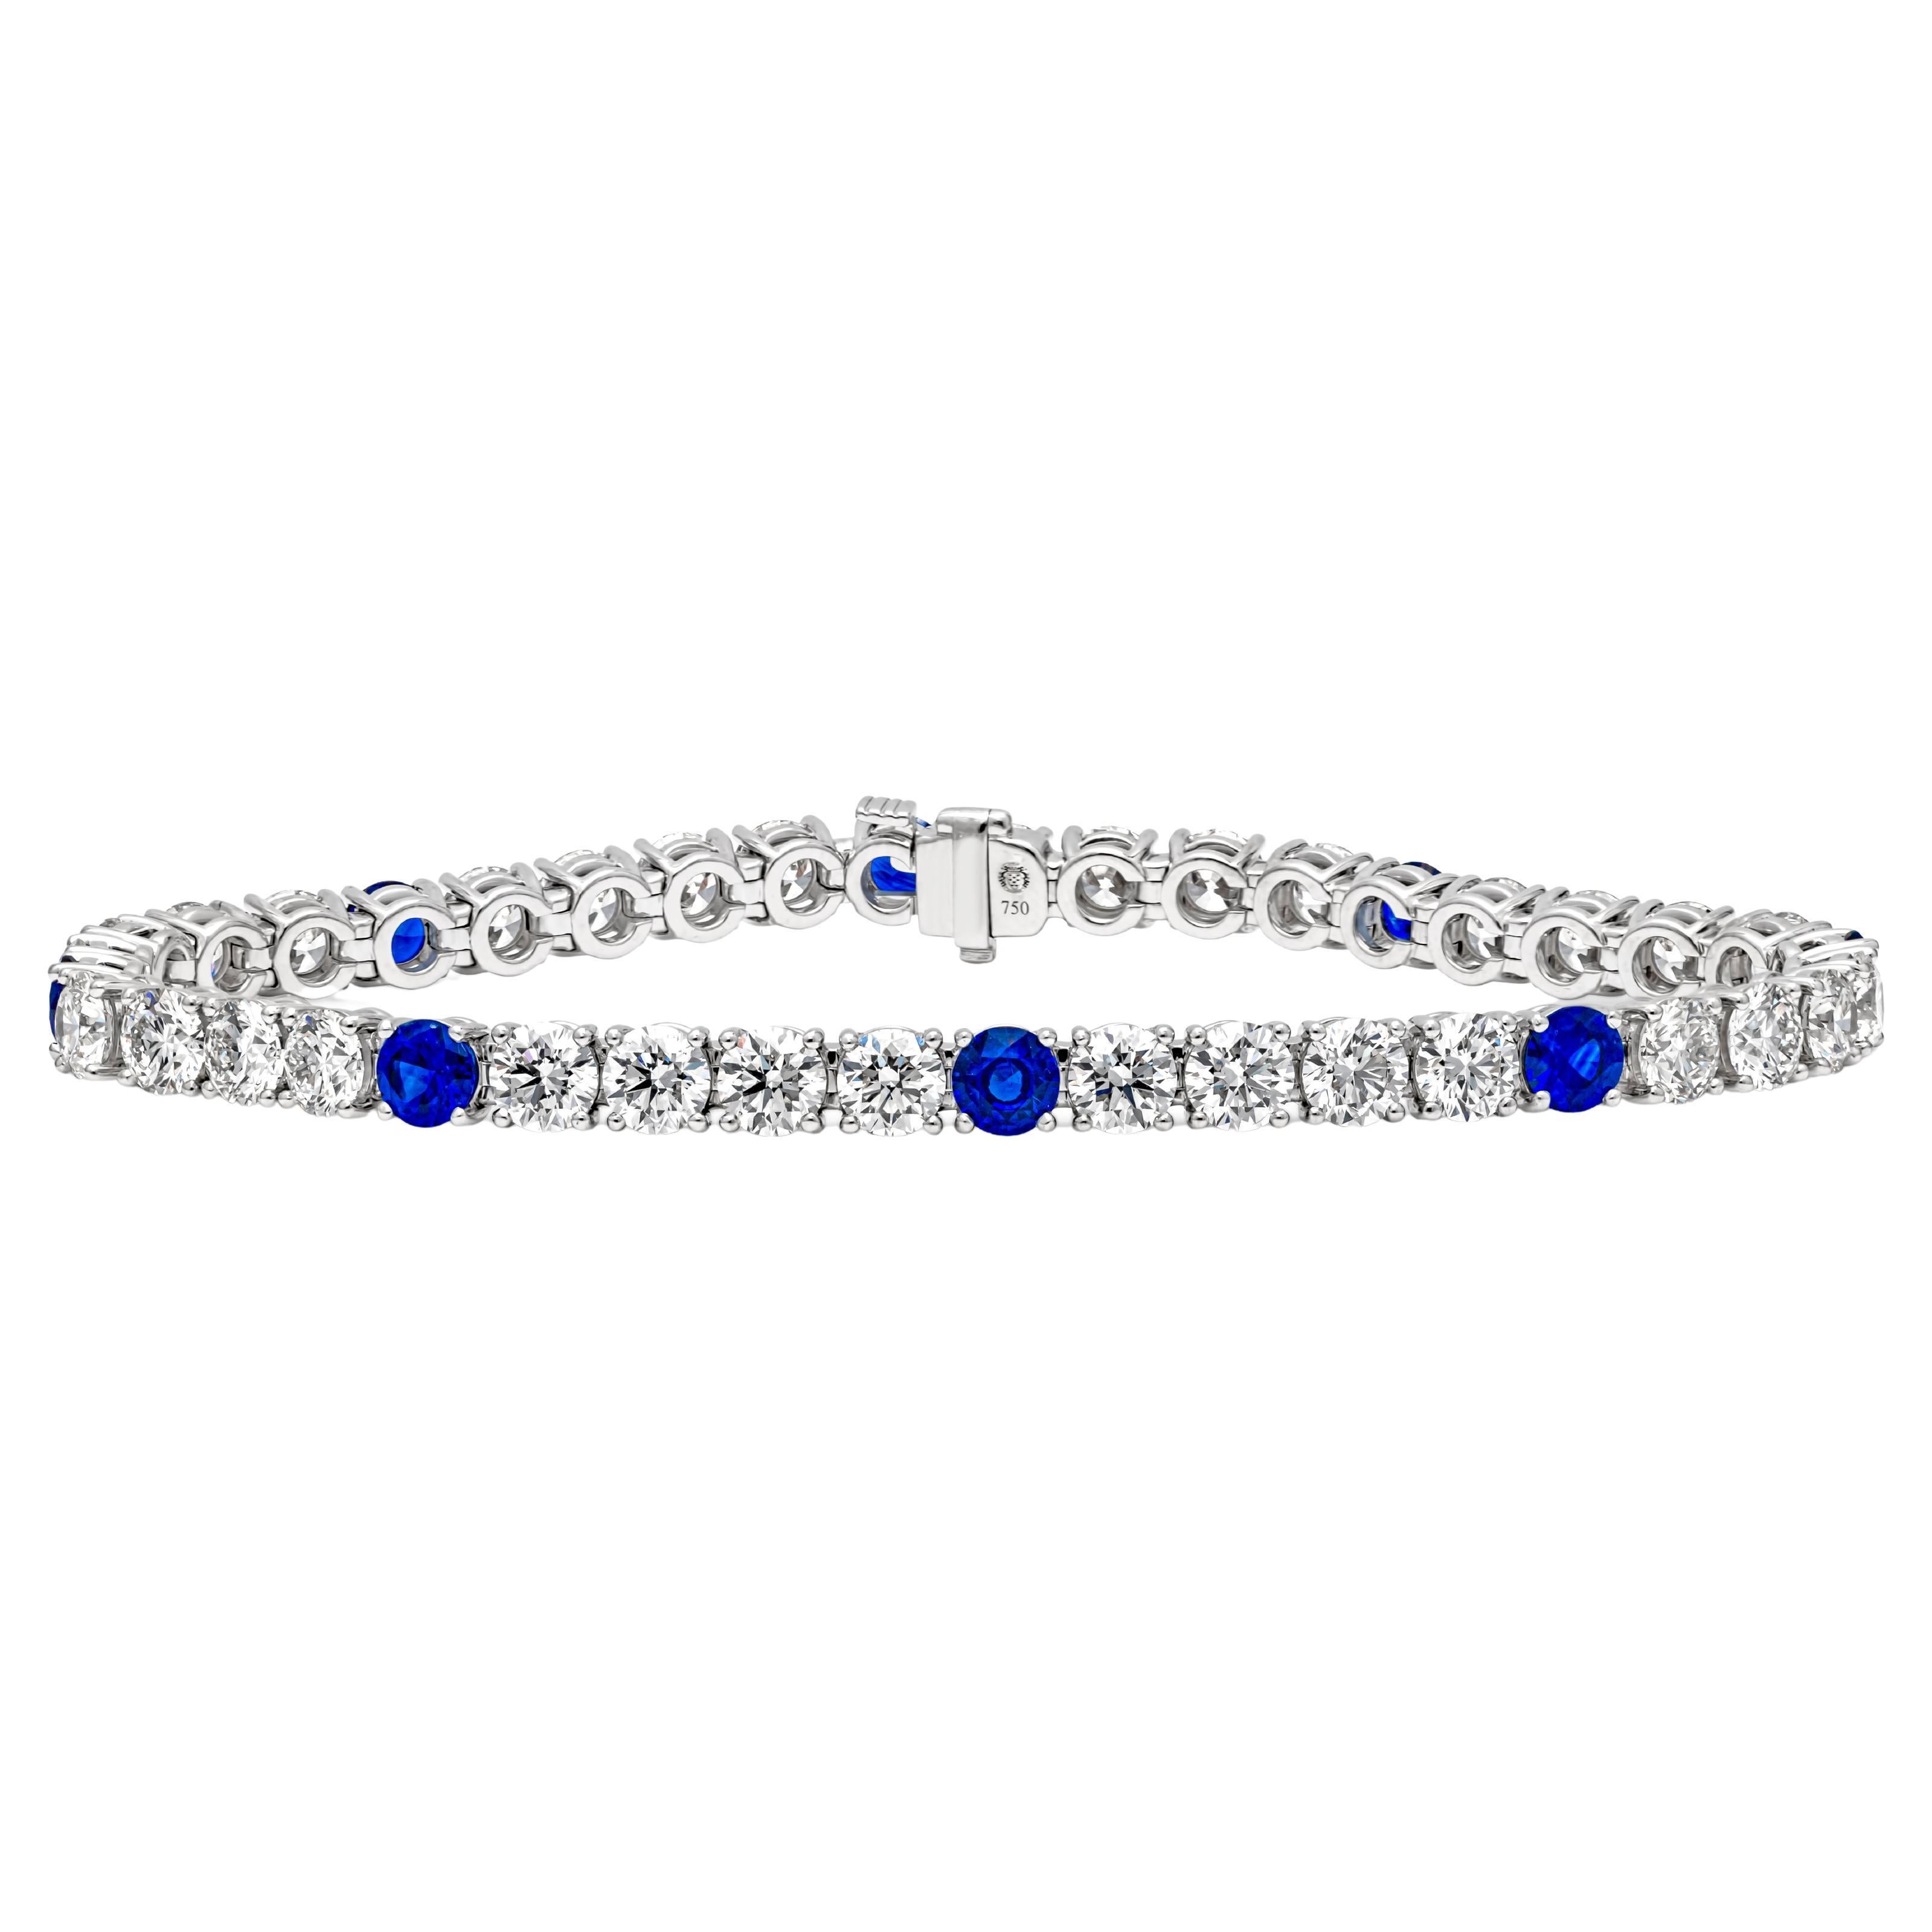 Roman Malakov 16.48 Carats Total Round Blue Sapphire & Diamond Tennis Bracelet For Sale